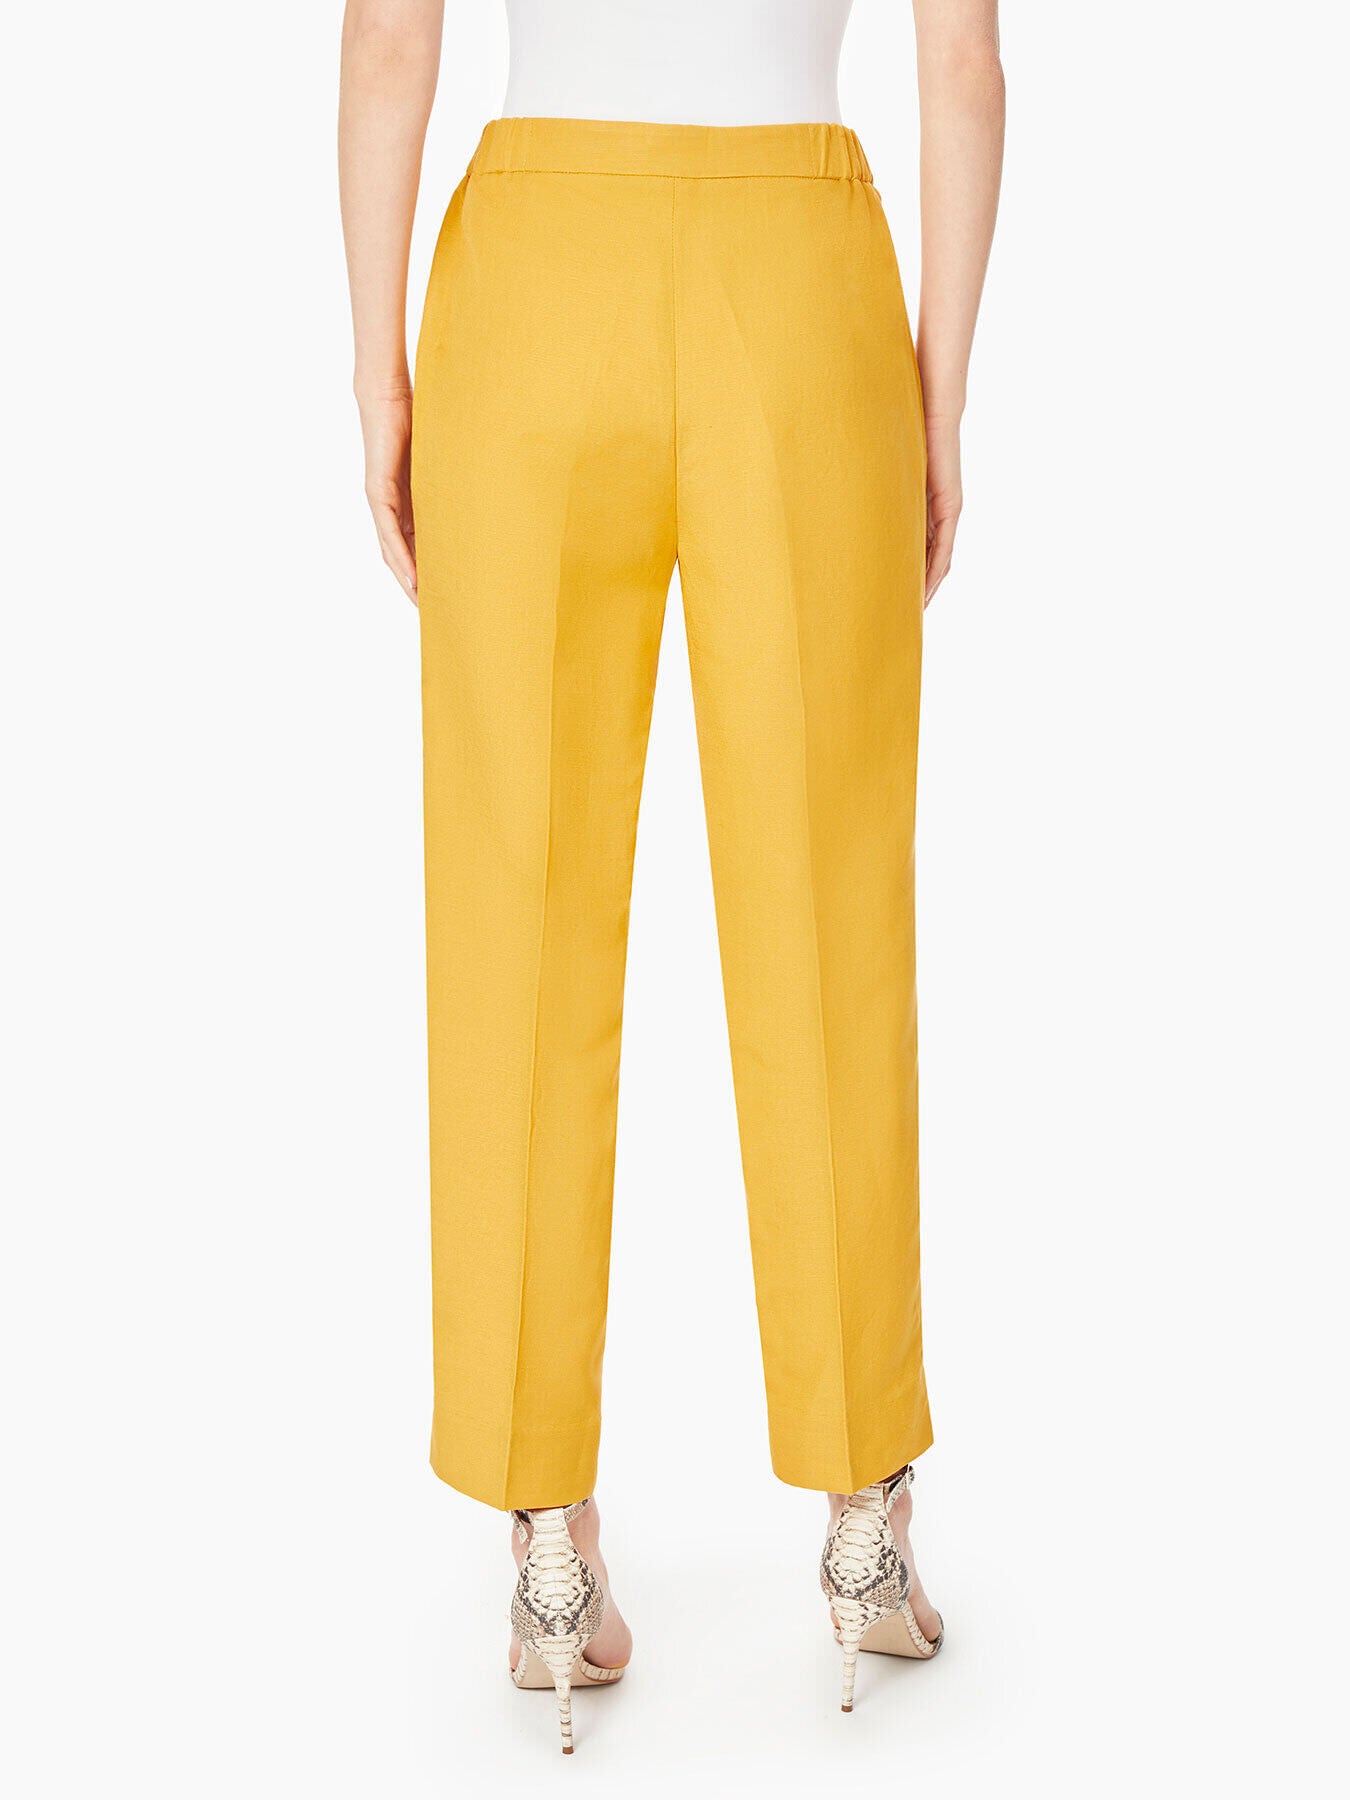 Yellow Pants - Elastic Waist Pants - Cream High Waist Wide Leg Pants